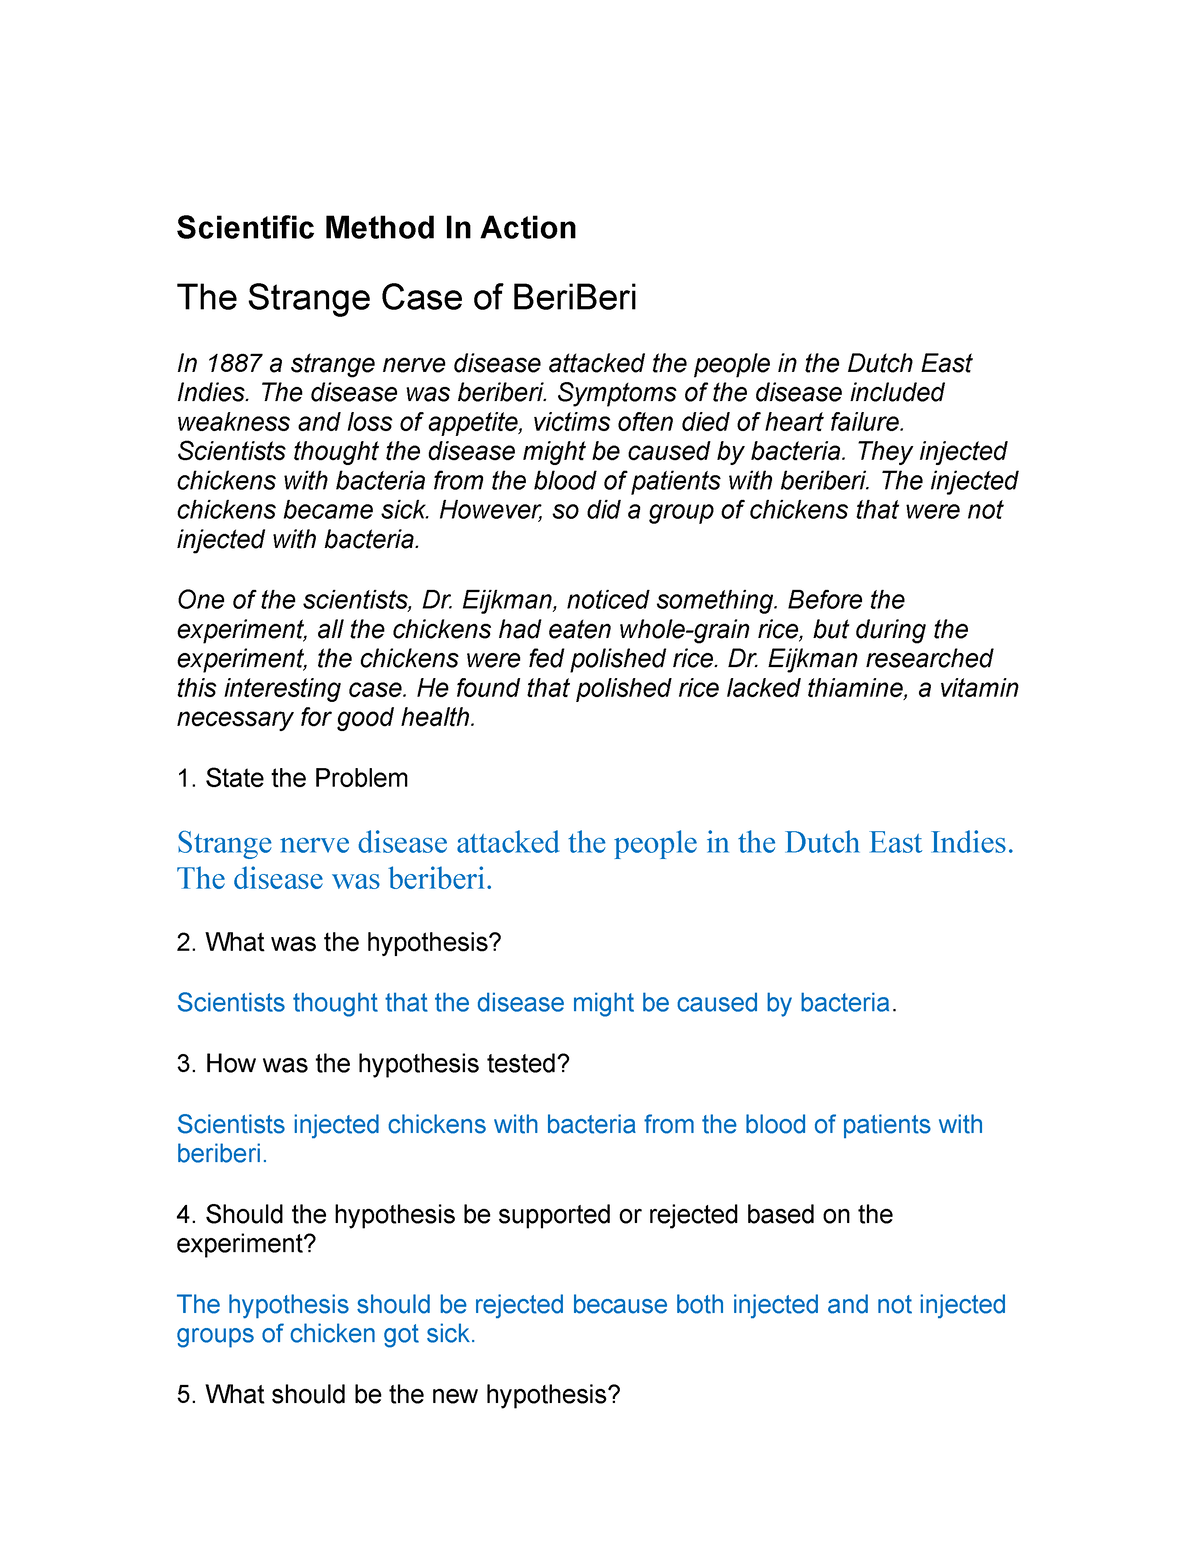 sc-103-scientific-method-in-action-questions-scientific-method-in-action-the-strange-case-of